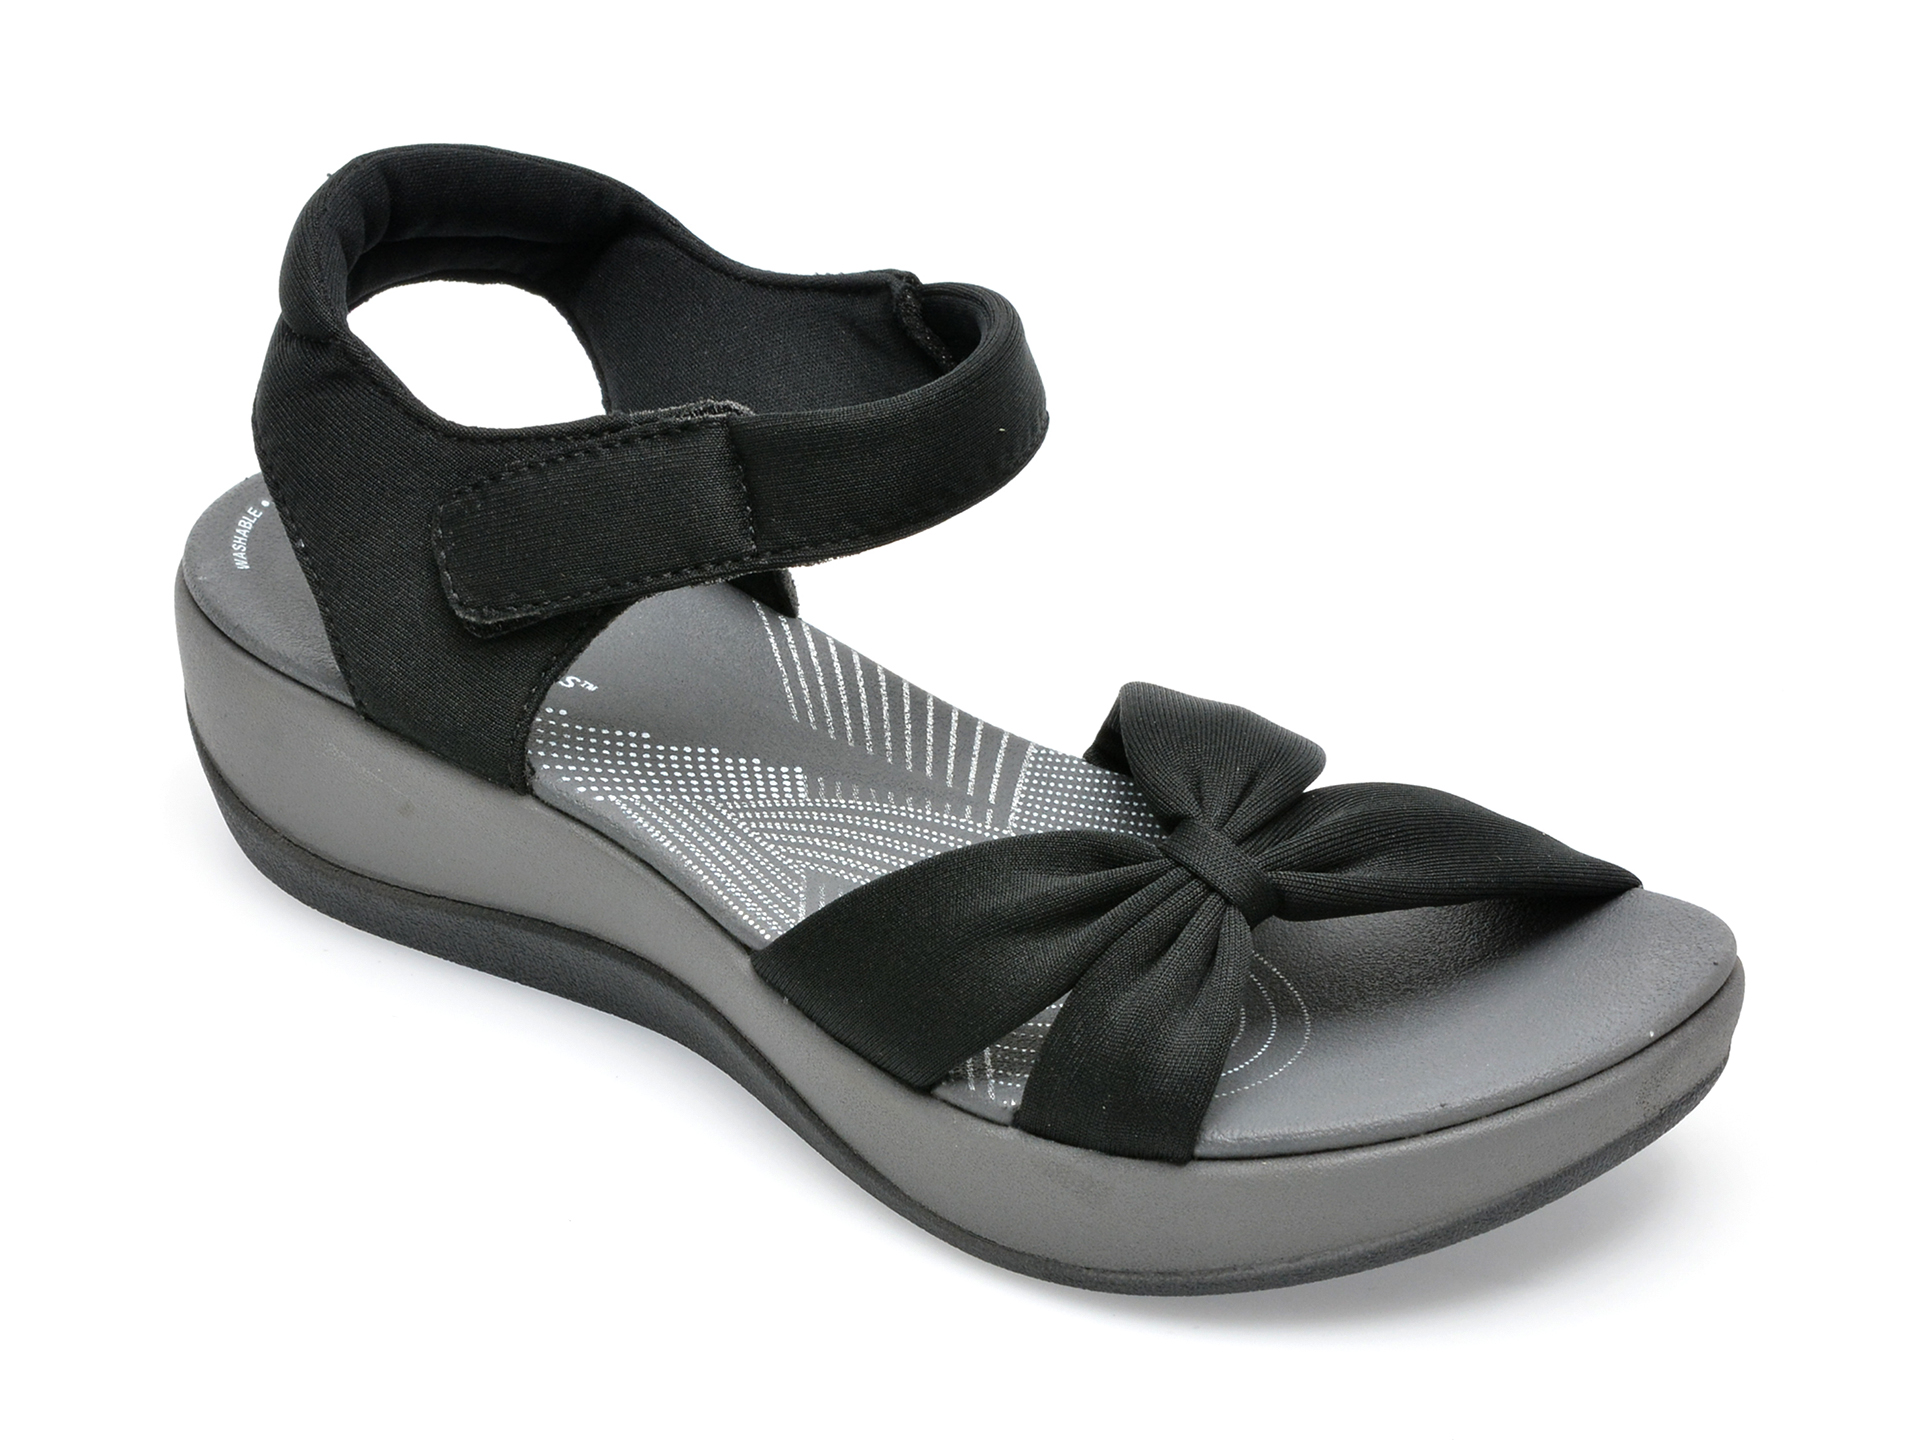 Sandale CLARKS negre, ARLA SHORE 0912, din material textil Clarks